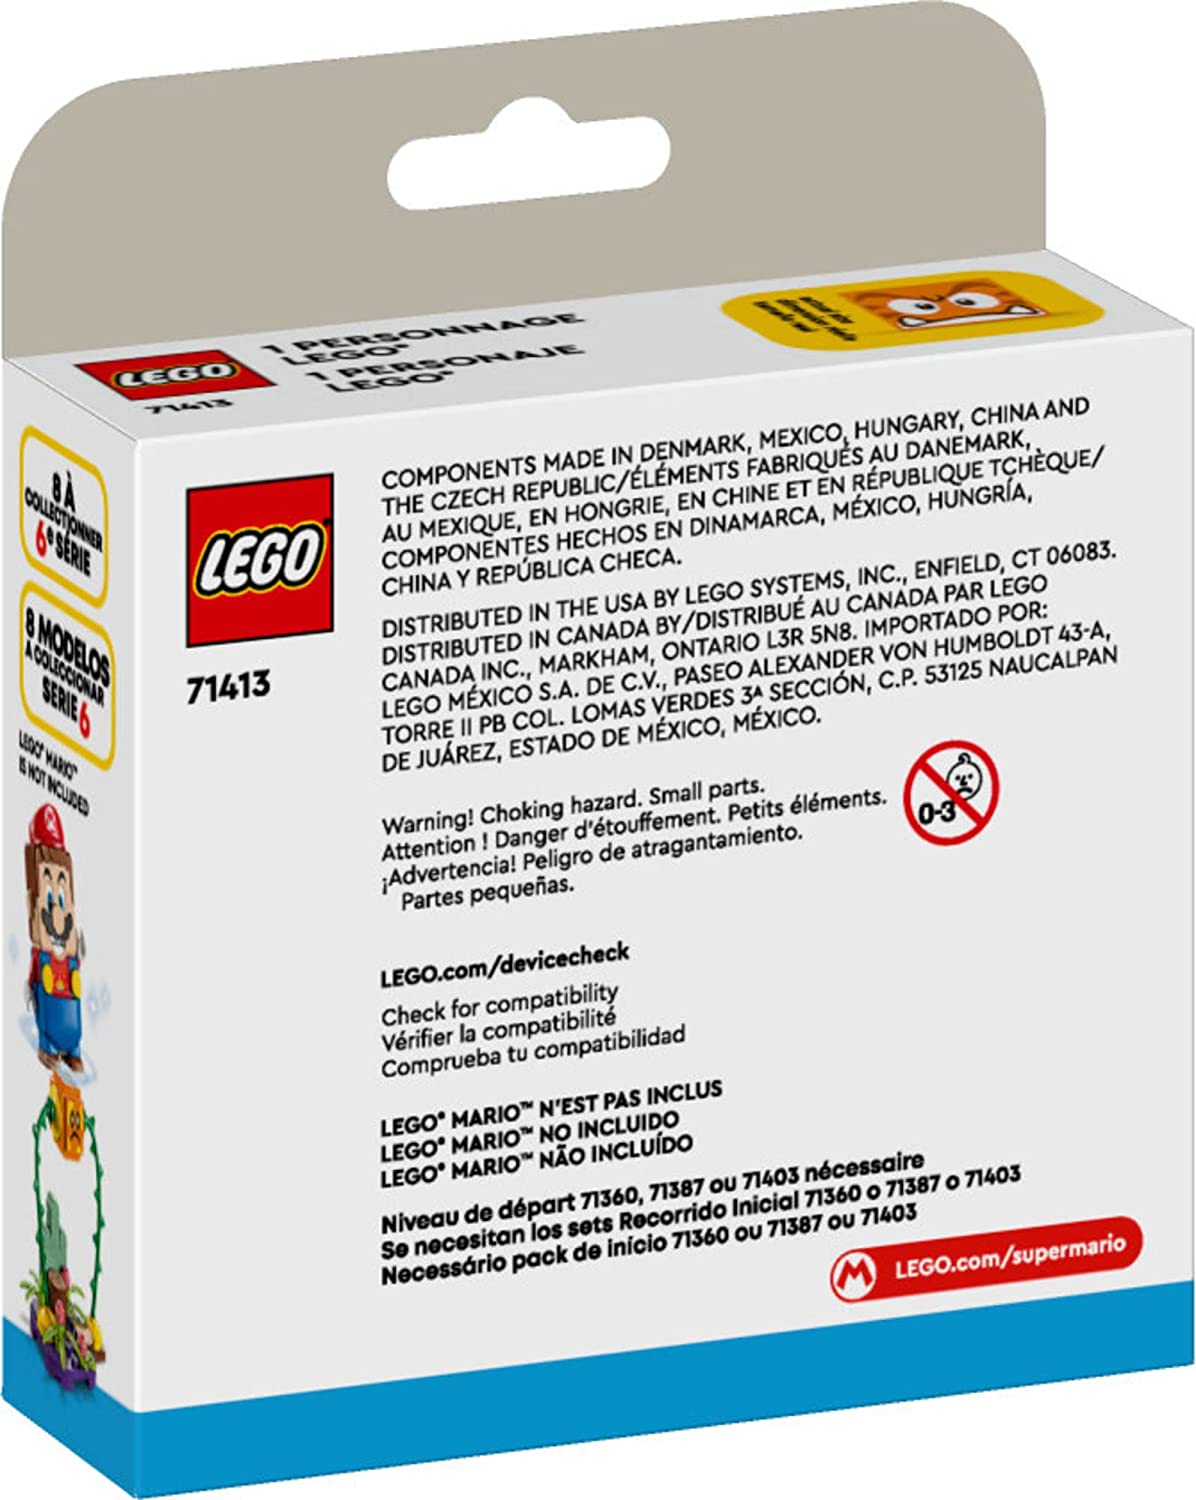 LEGO Super Mario Character Packs – Series 6 71413 - LEGO, LEGO Super Mario